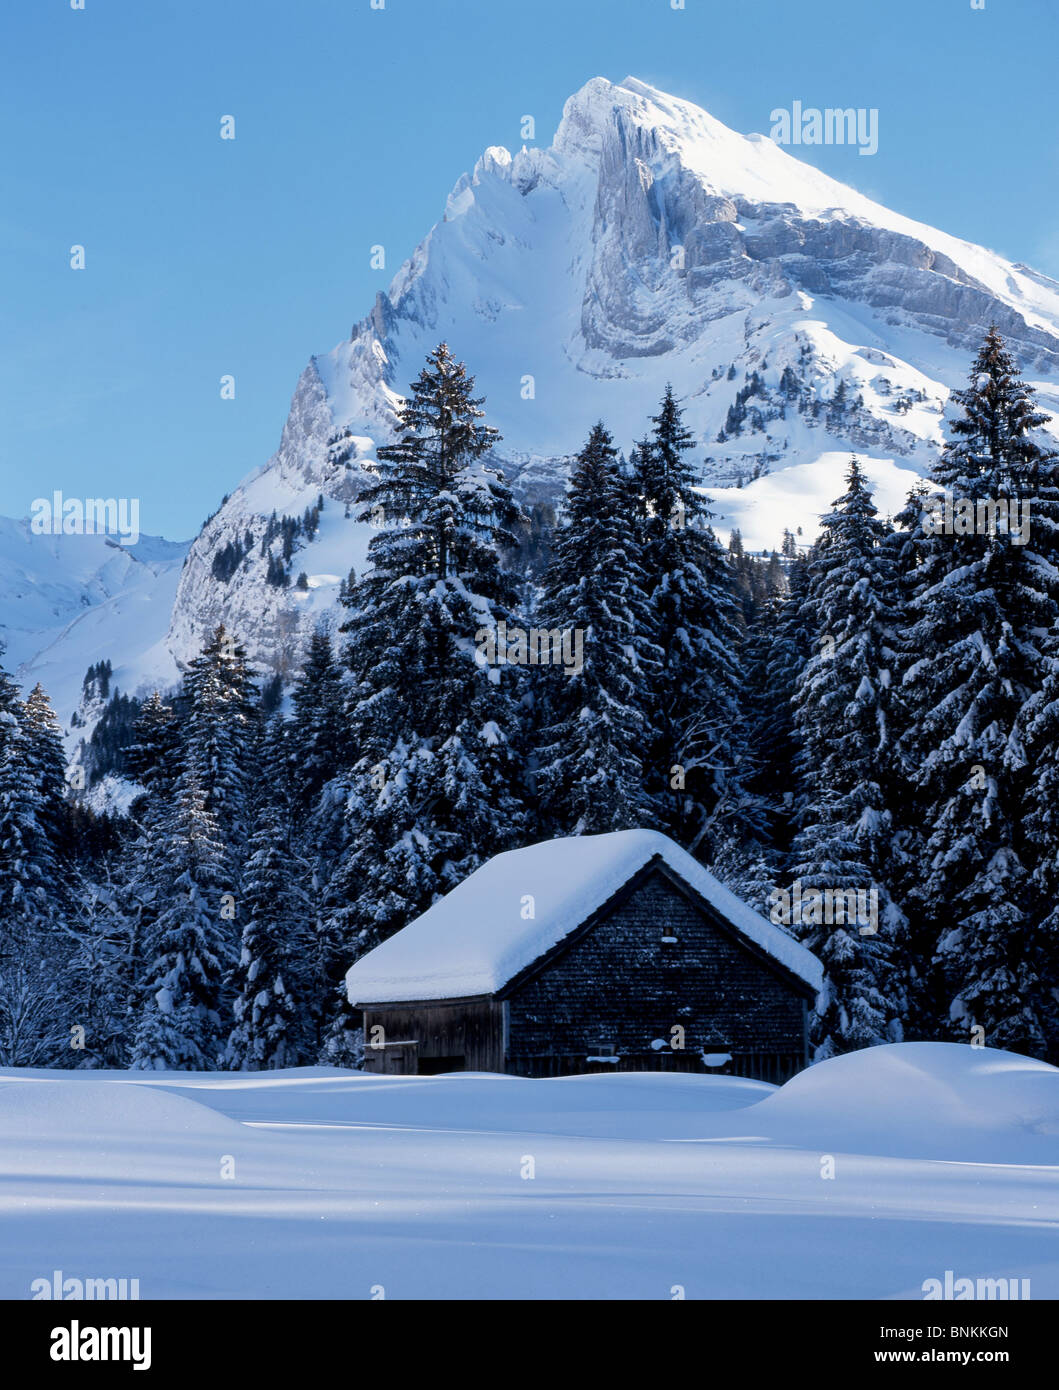 Switzerland scenery winter scenery mountain Schaf hut mountains snow house home snowy canton St. Gallen Toggenburg Stock Photo